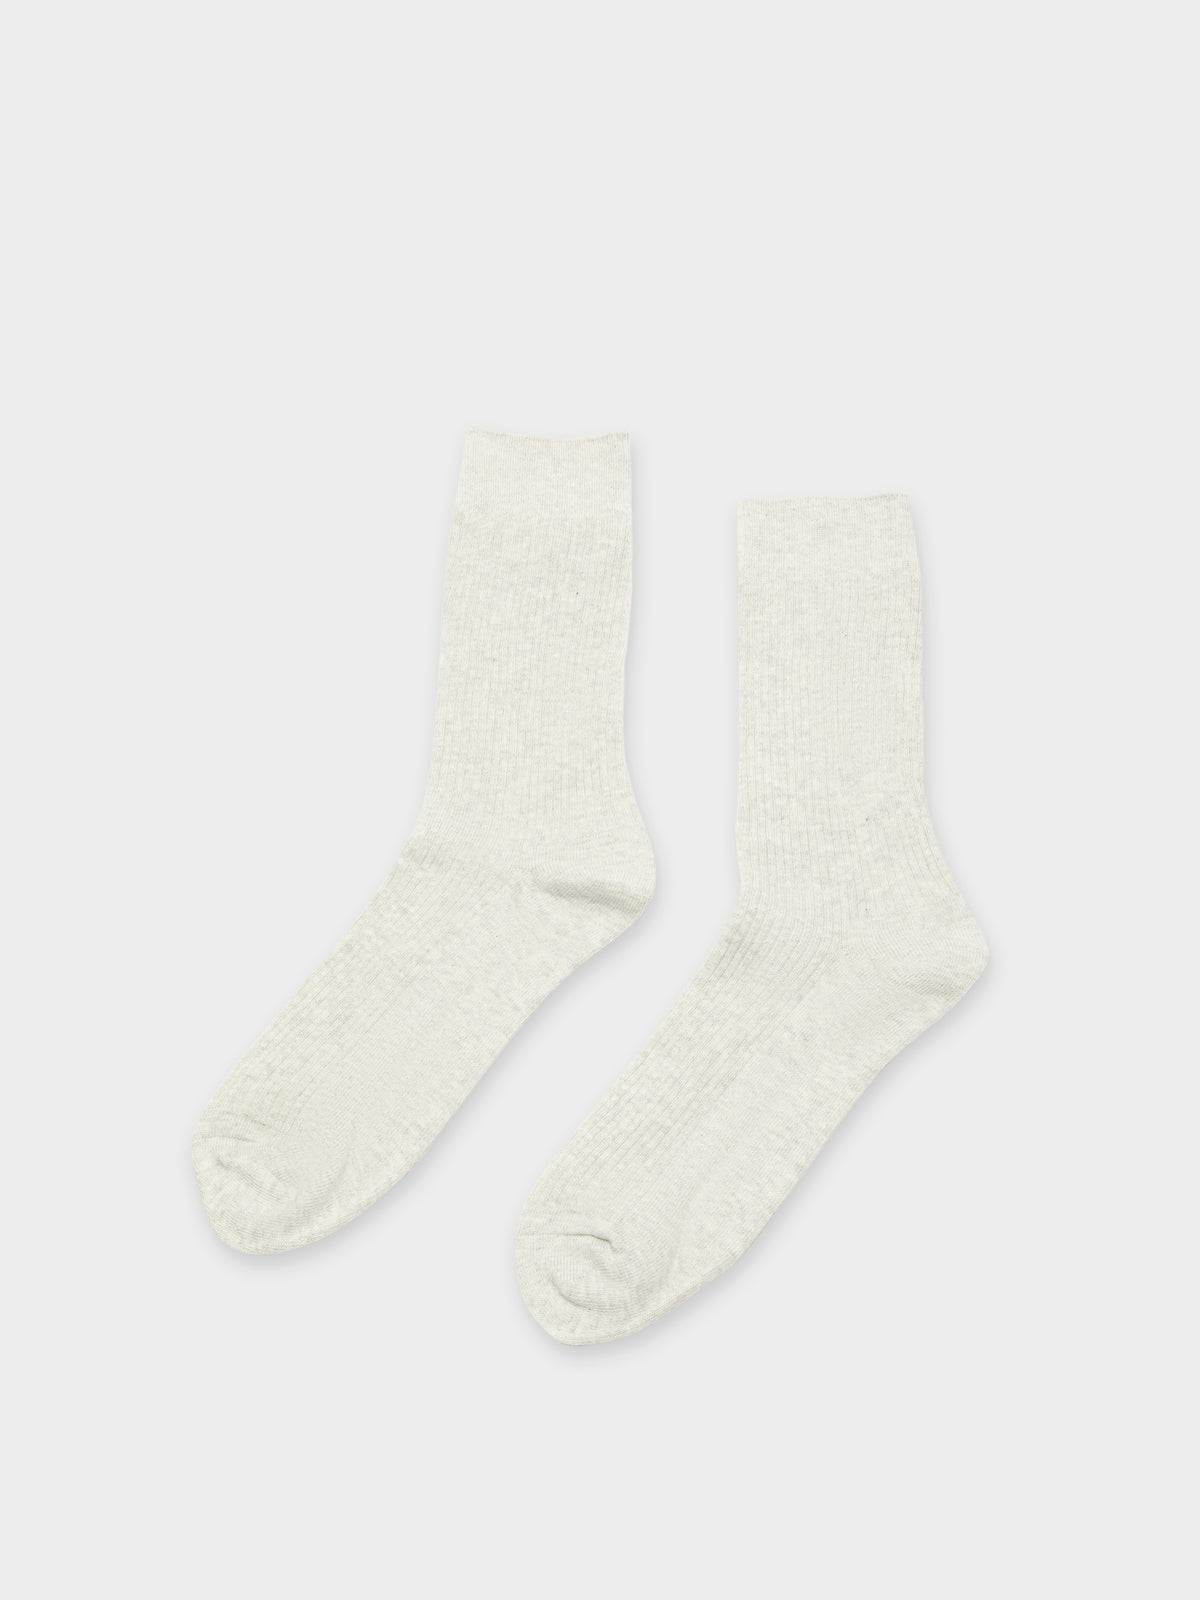 1 Pair of Everyday Socks